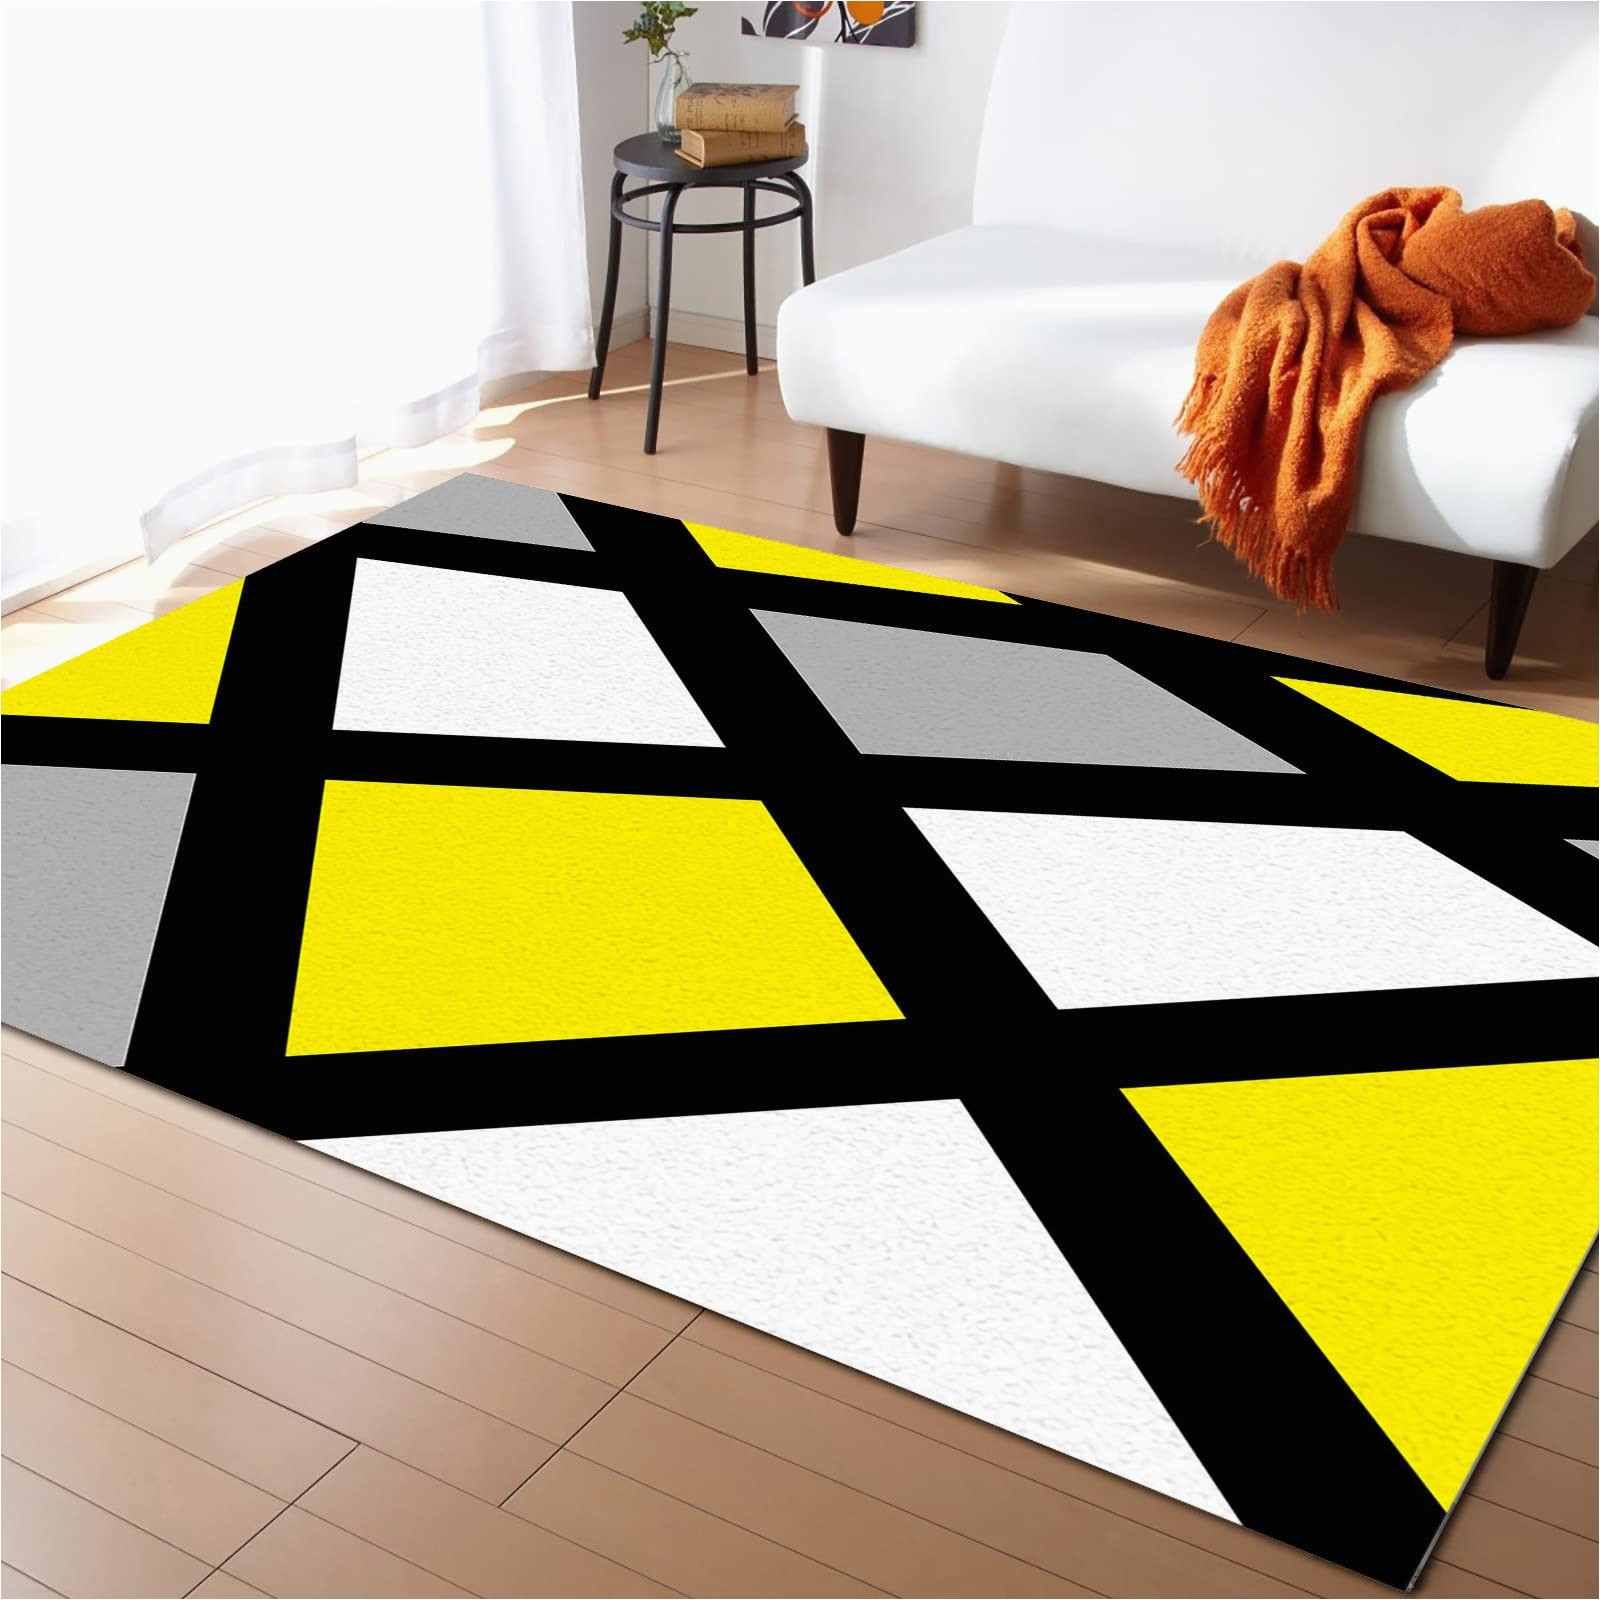 Modern area Rugs 5 X 8 Yellow Grey Large Rectangular area Rugs 5′ X 8′ Living Room, Modern White Geometric Abstract Art Black Lace Plaid Durable Non Slip Rug Carpet Floor …